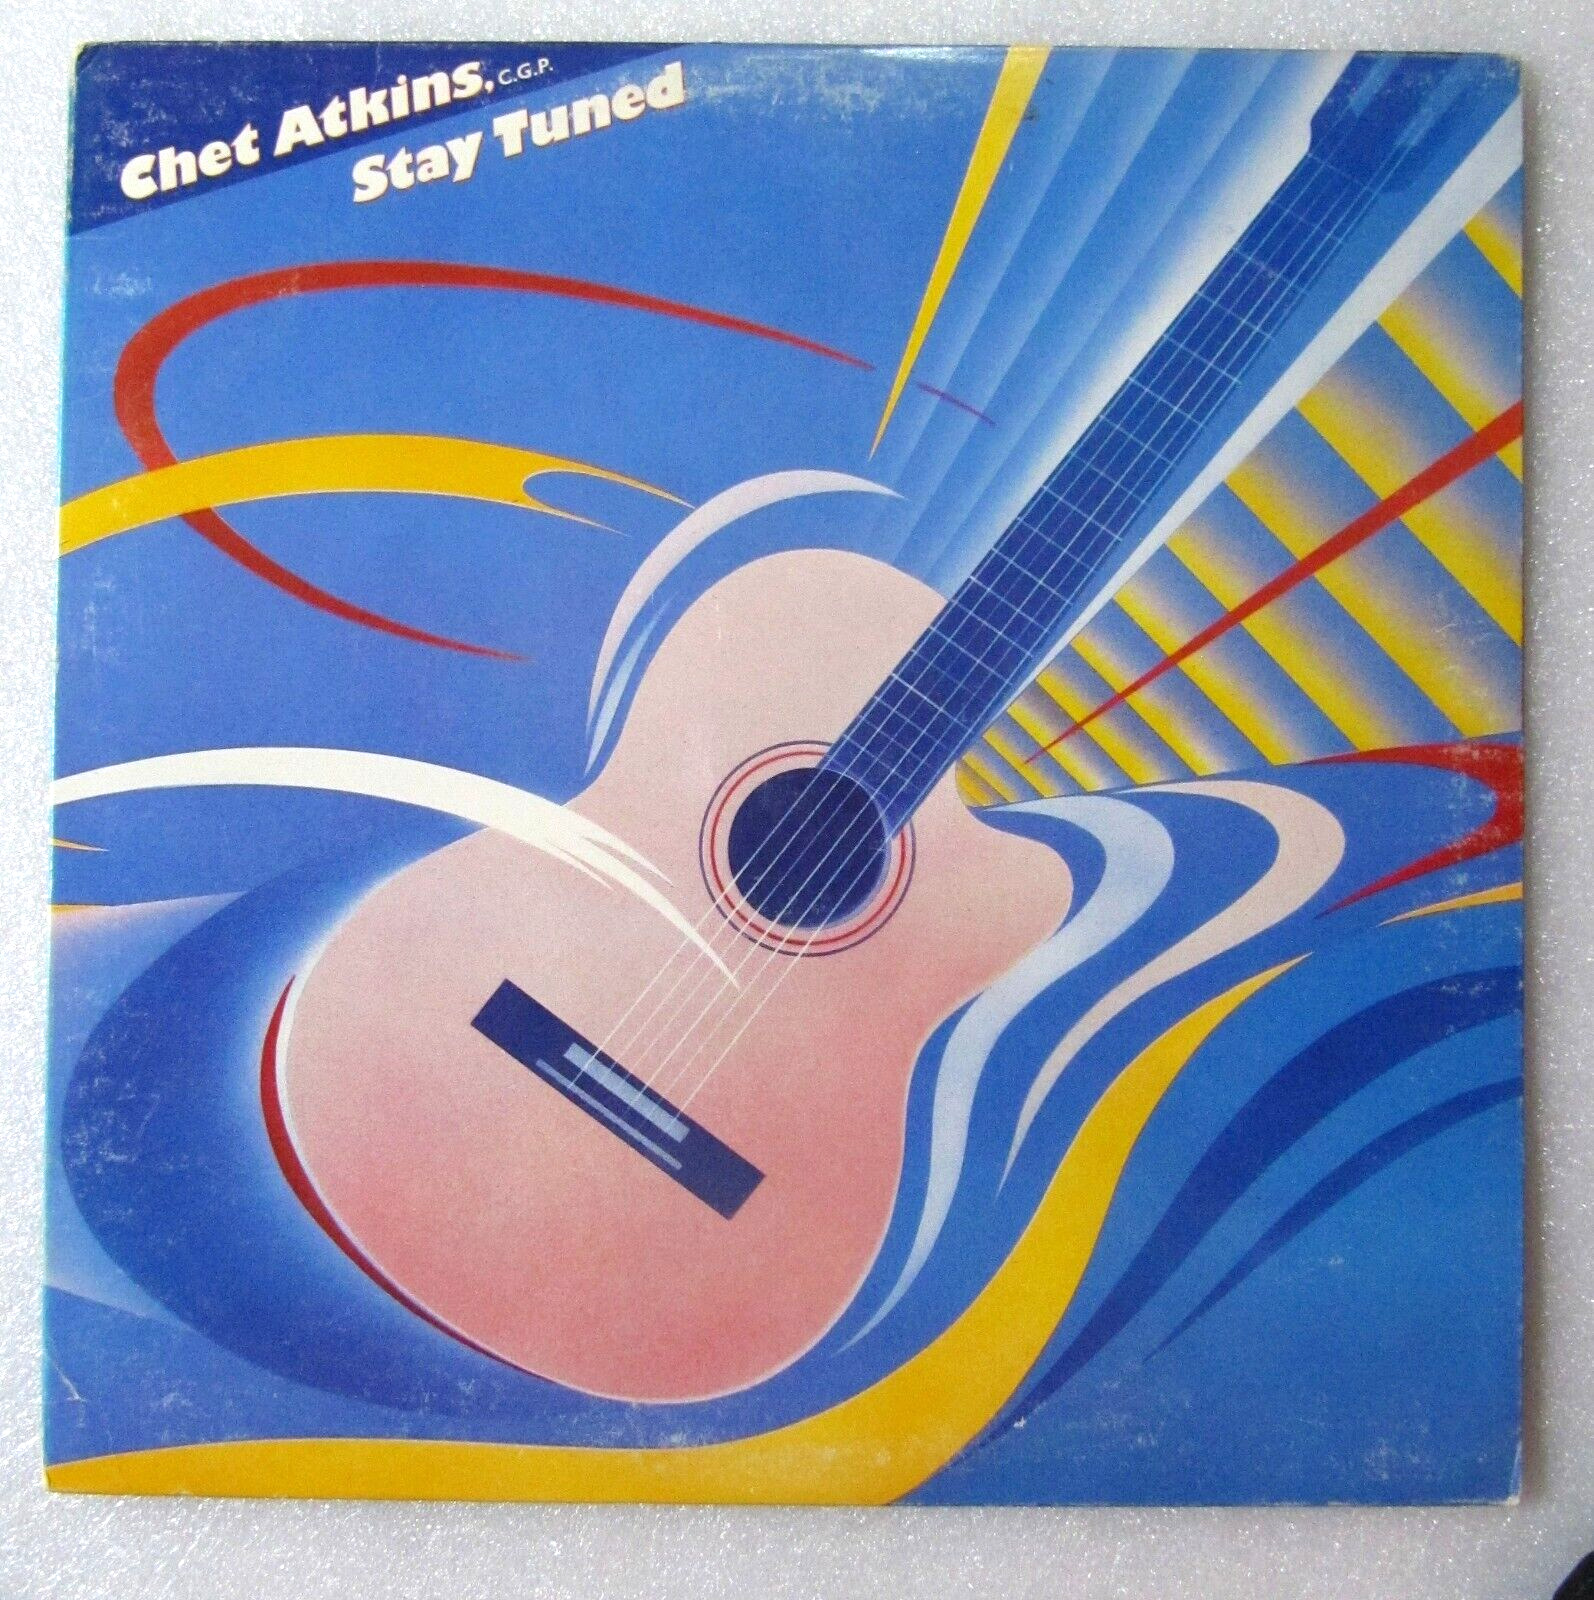 CHET ATKINS - STAY TUNED - 12'' VINYL LP ALBUM 1985 COLUMBIA RECORDS VG